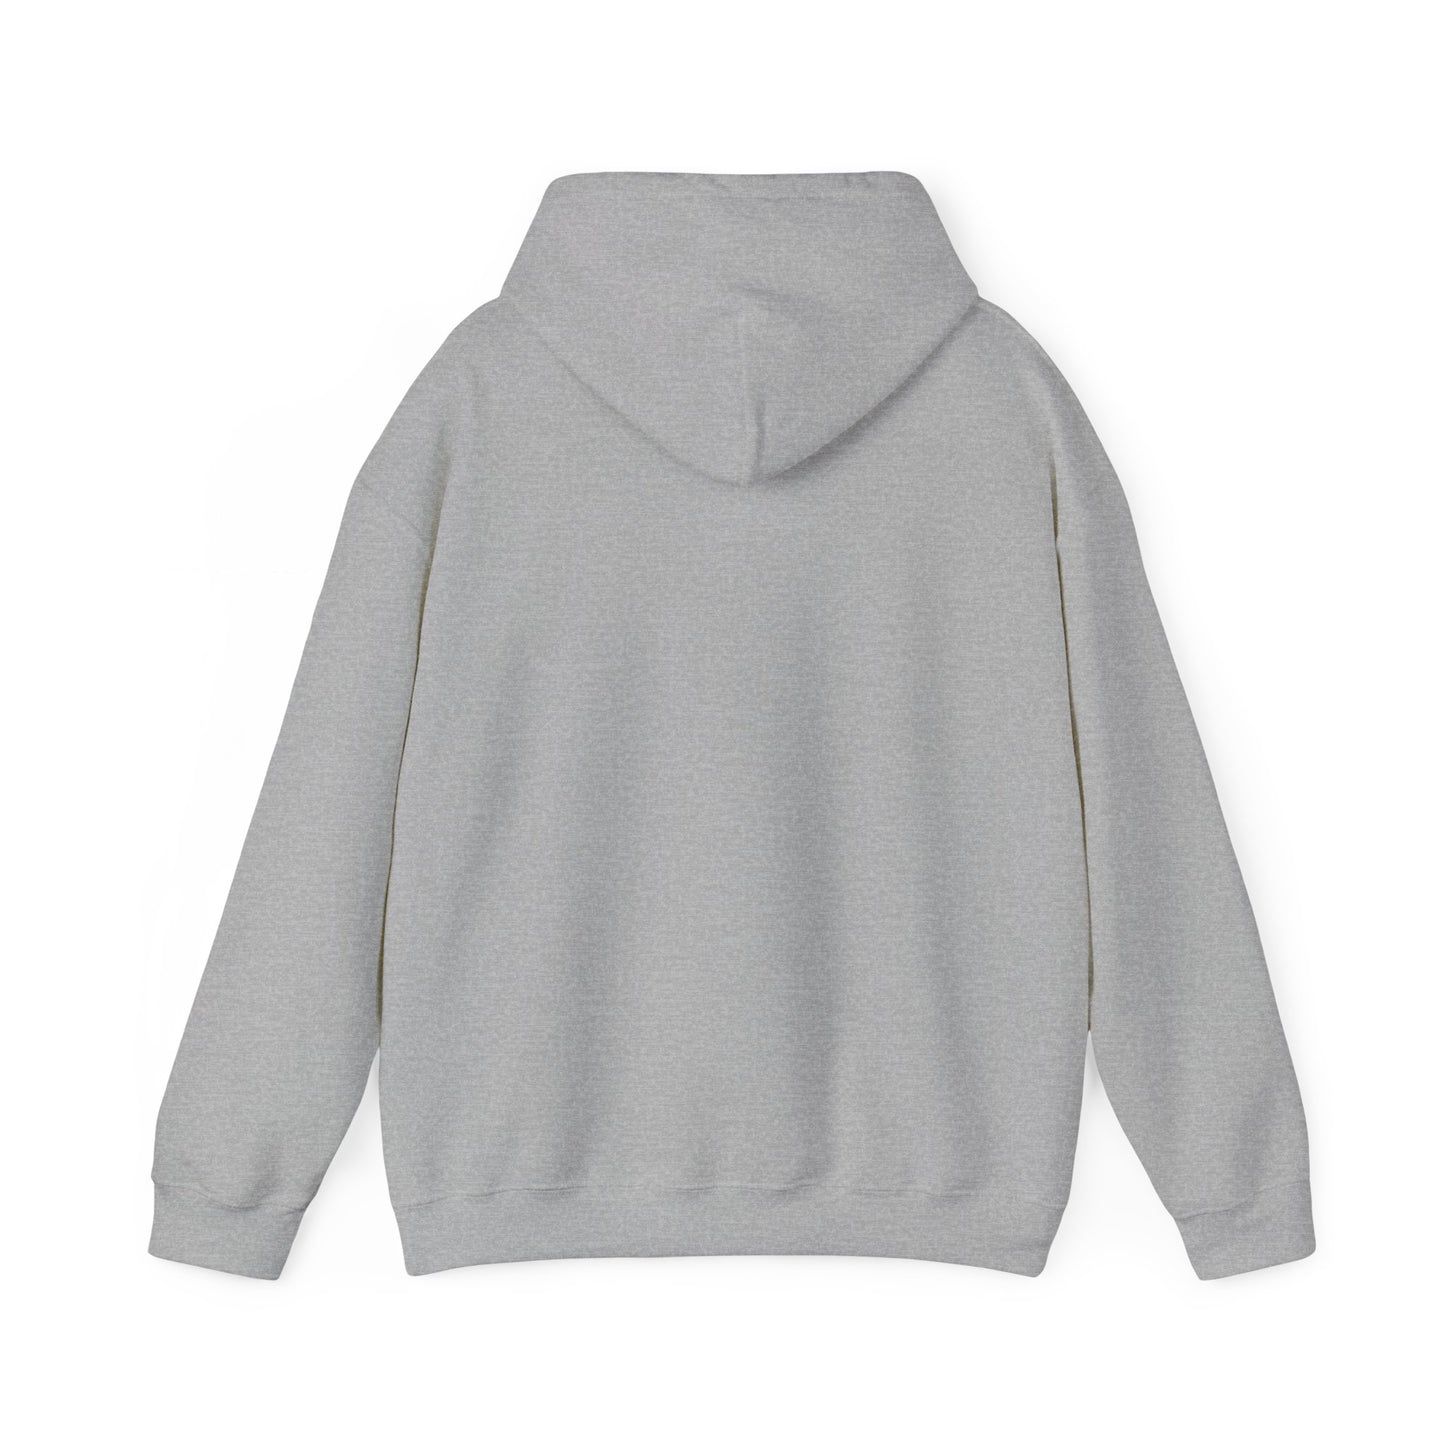 Yut - Hooded Sweatshirt